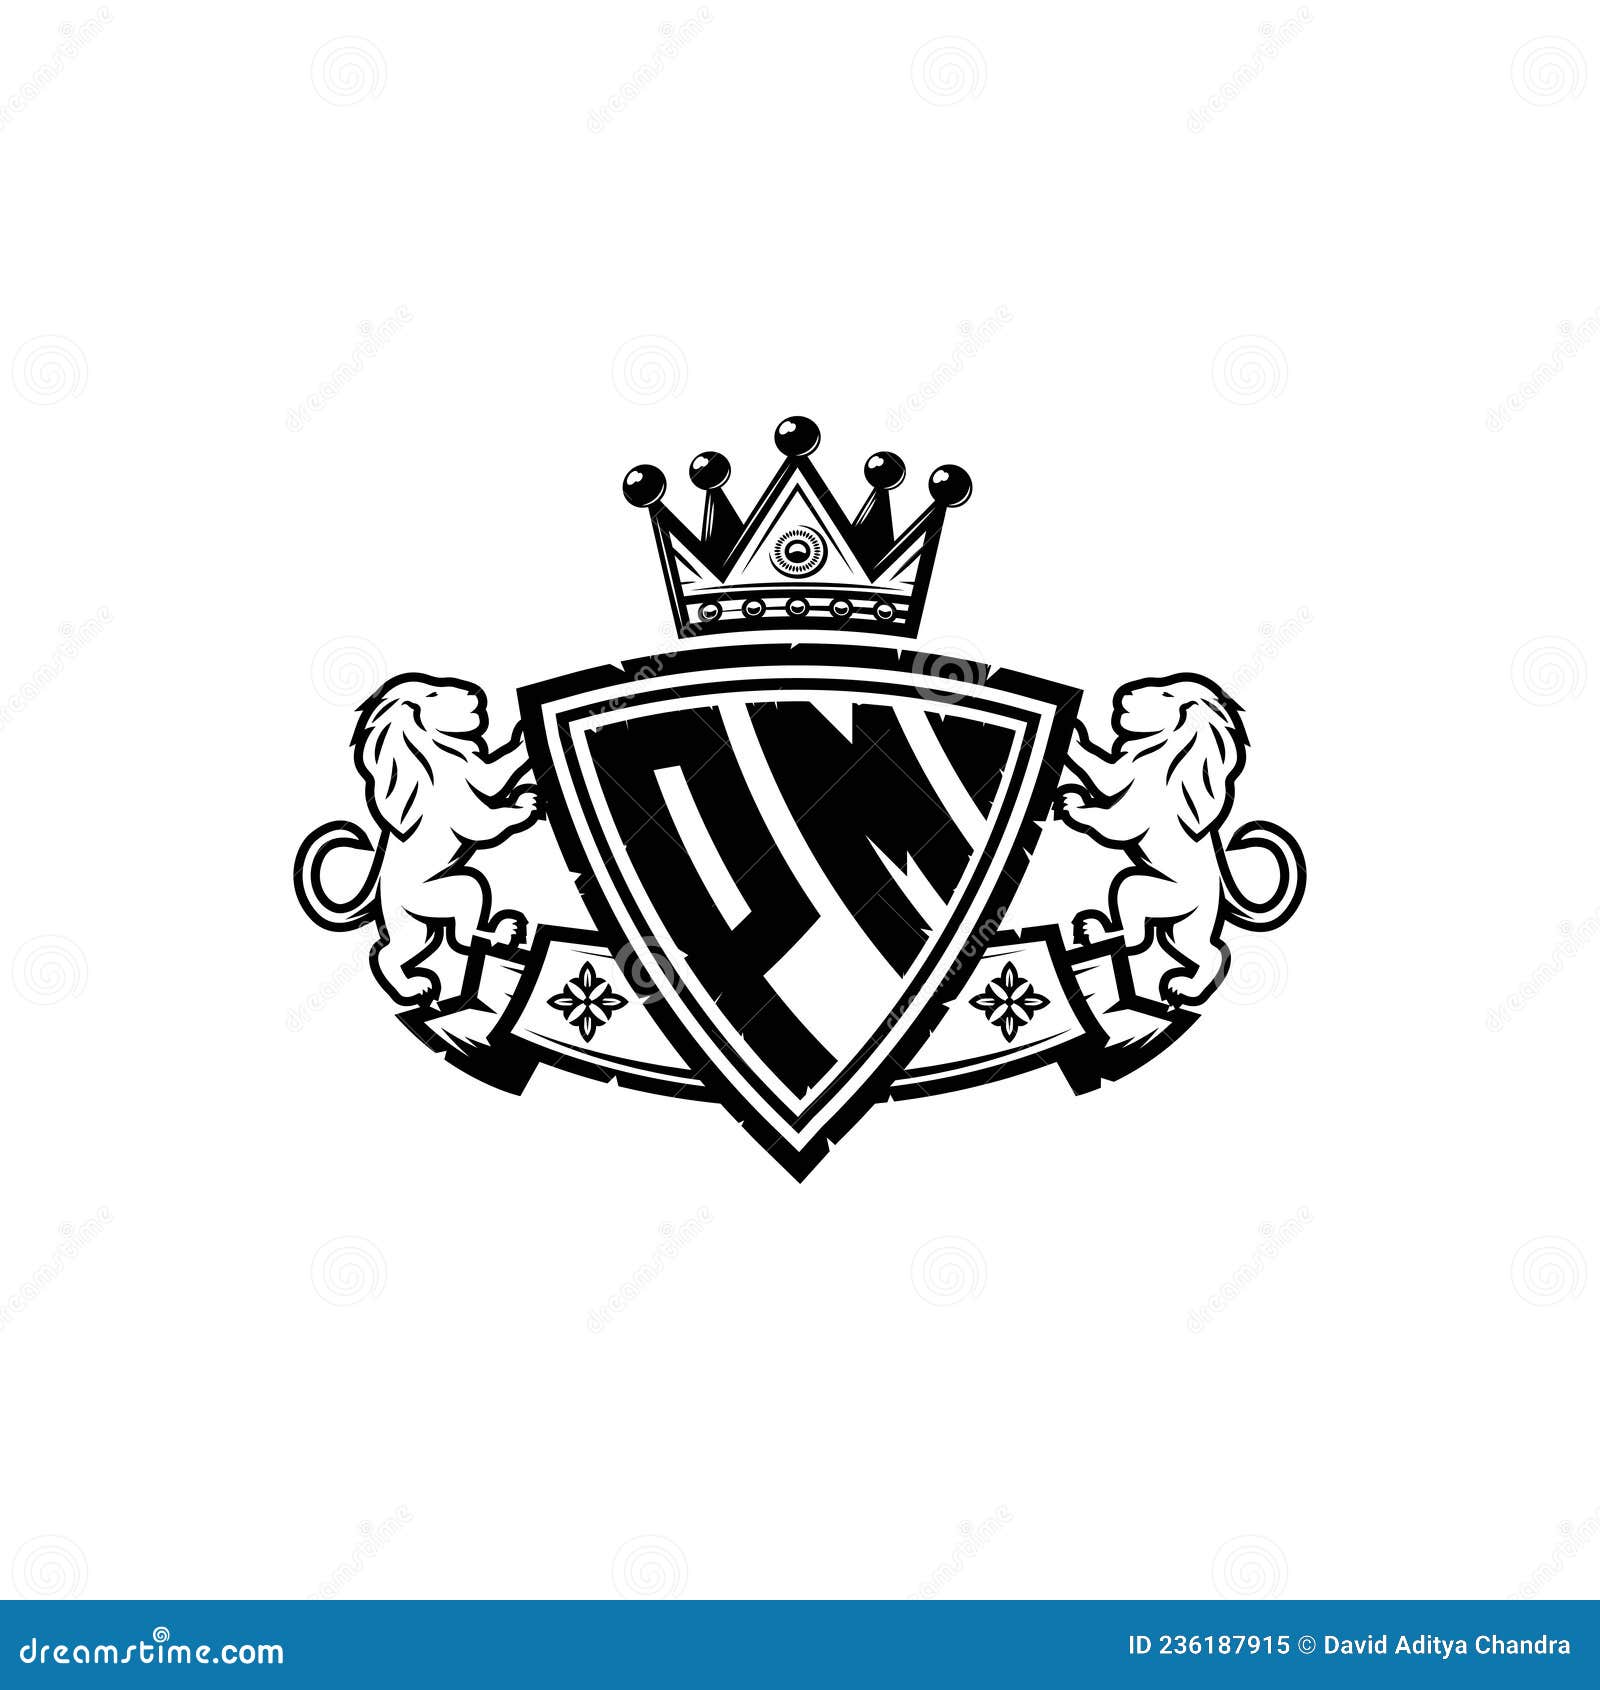 PM Logo Monogram Shield Crown Luxury Design Stock Vector